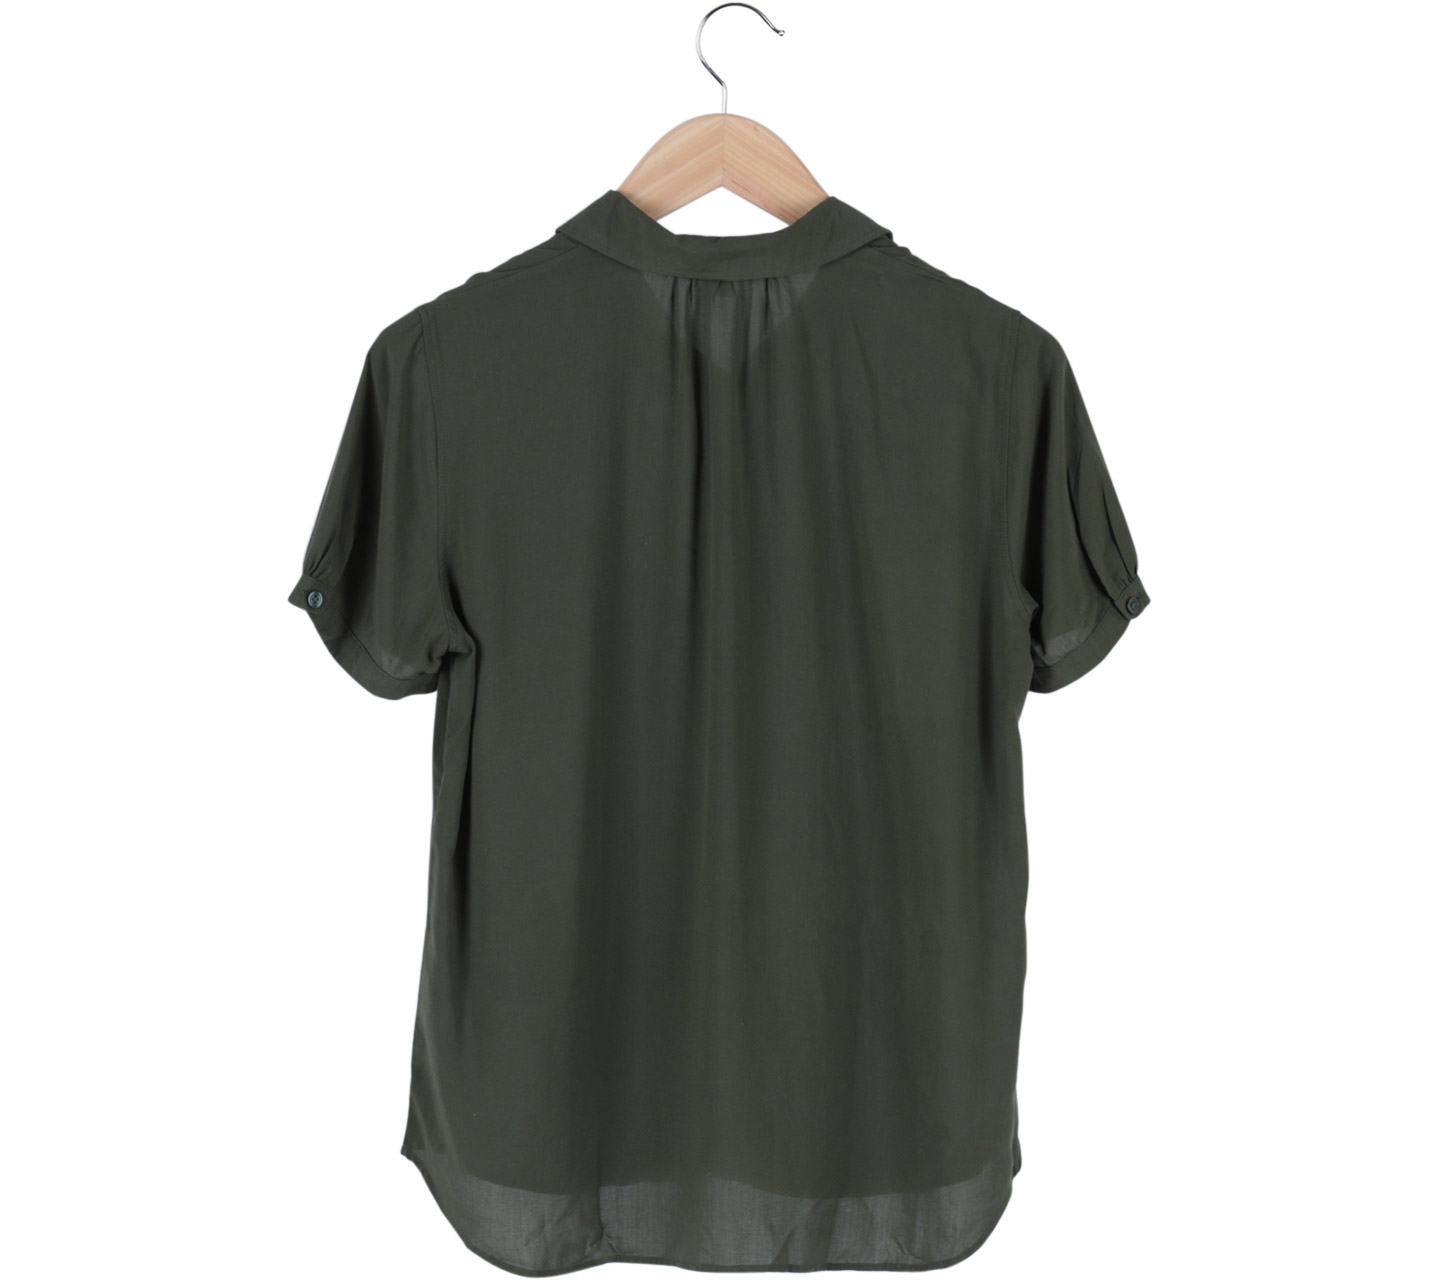 UNIQLO Green Army Shirt